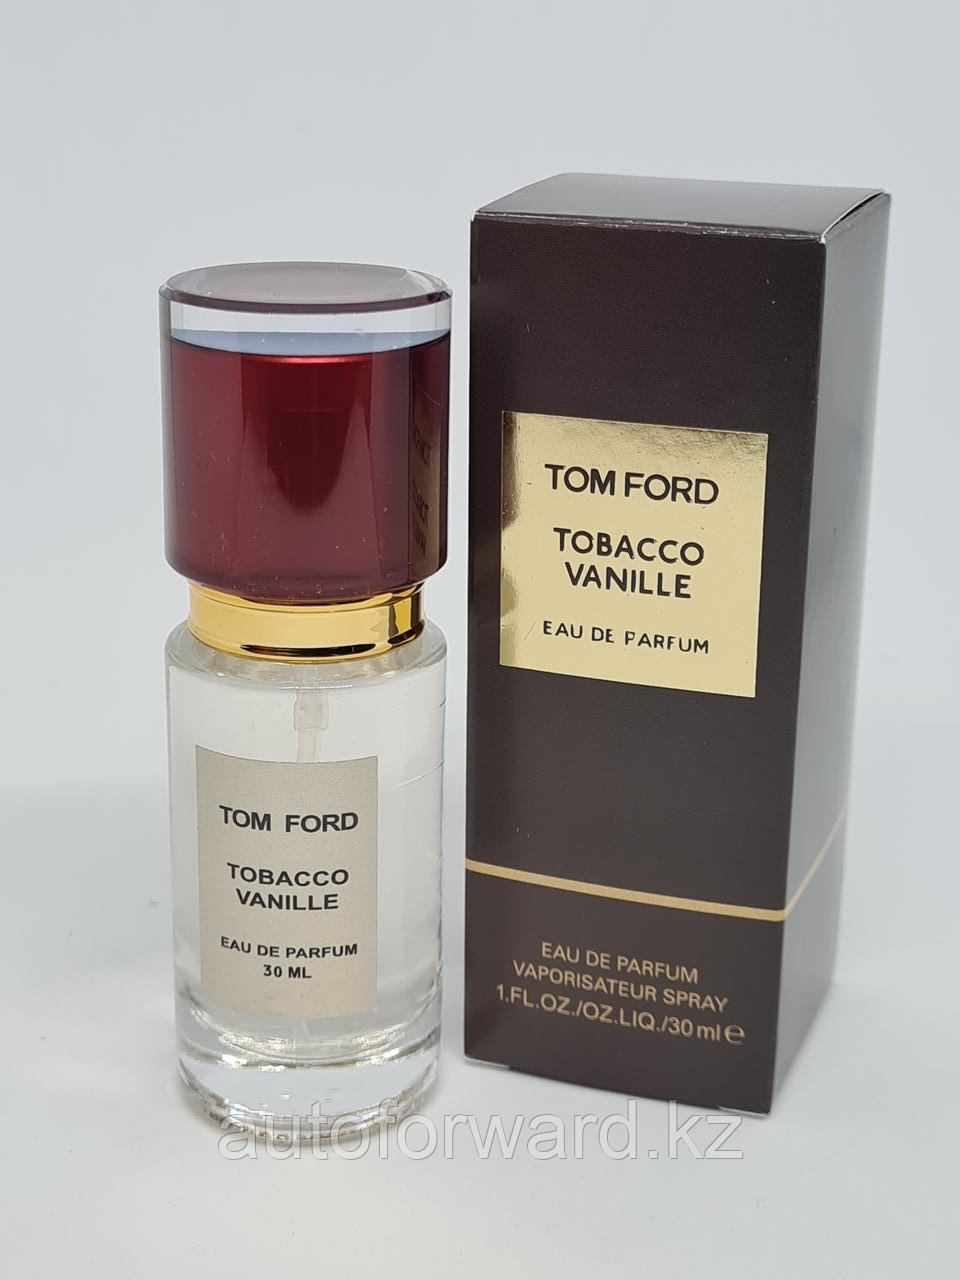 Tom Ford Tobacco Vanille 30 ml